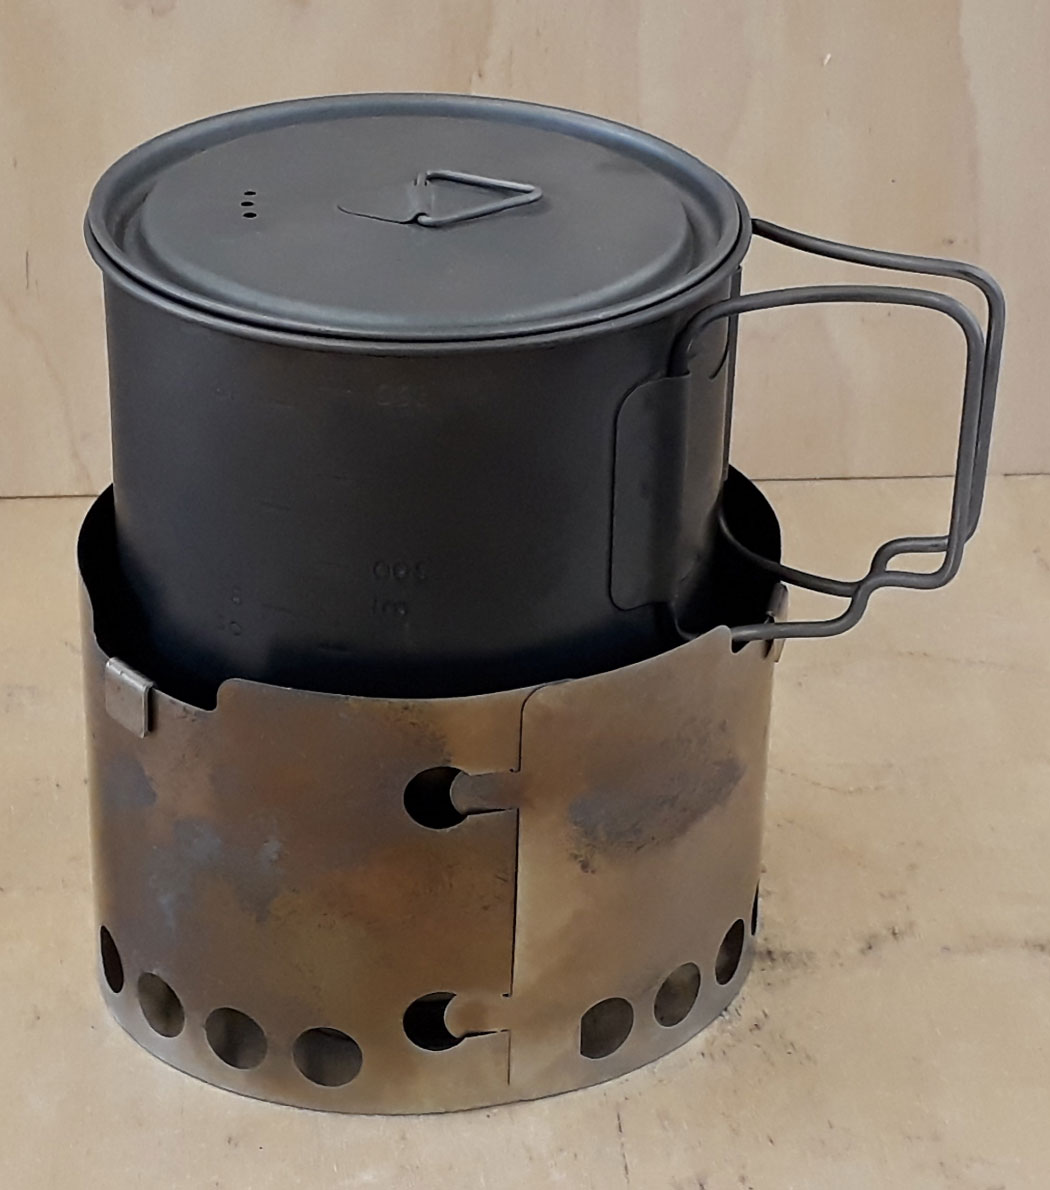 X-Boil FS 90-100 UL Combiangebot mit Pot750